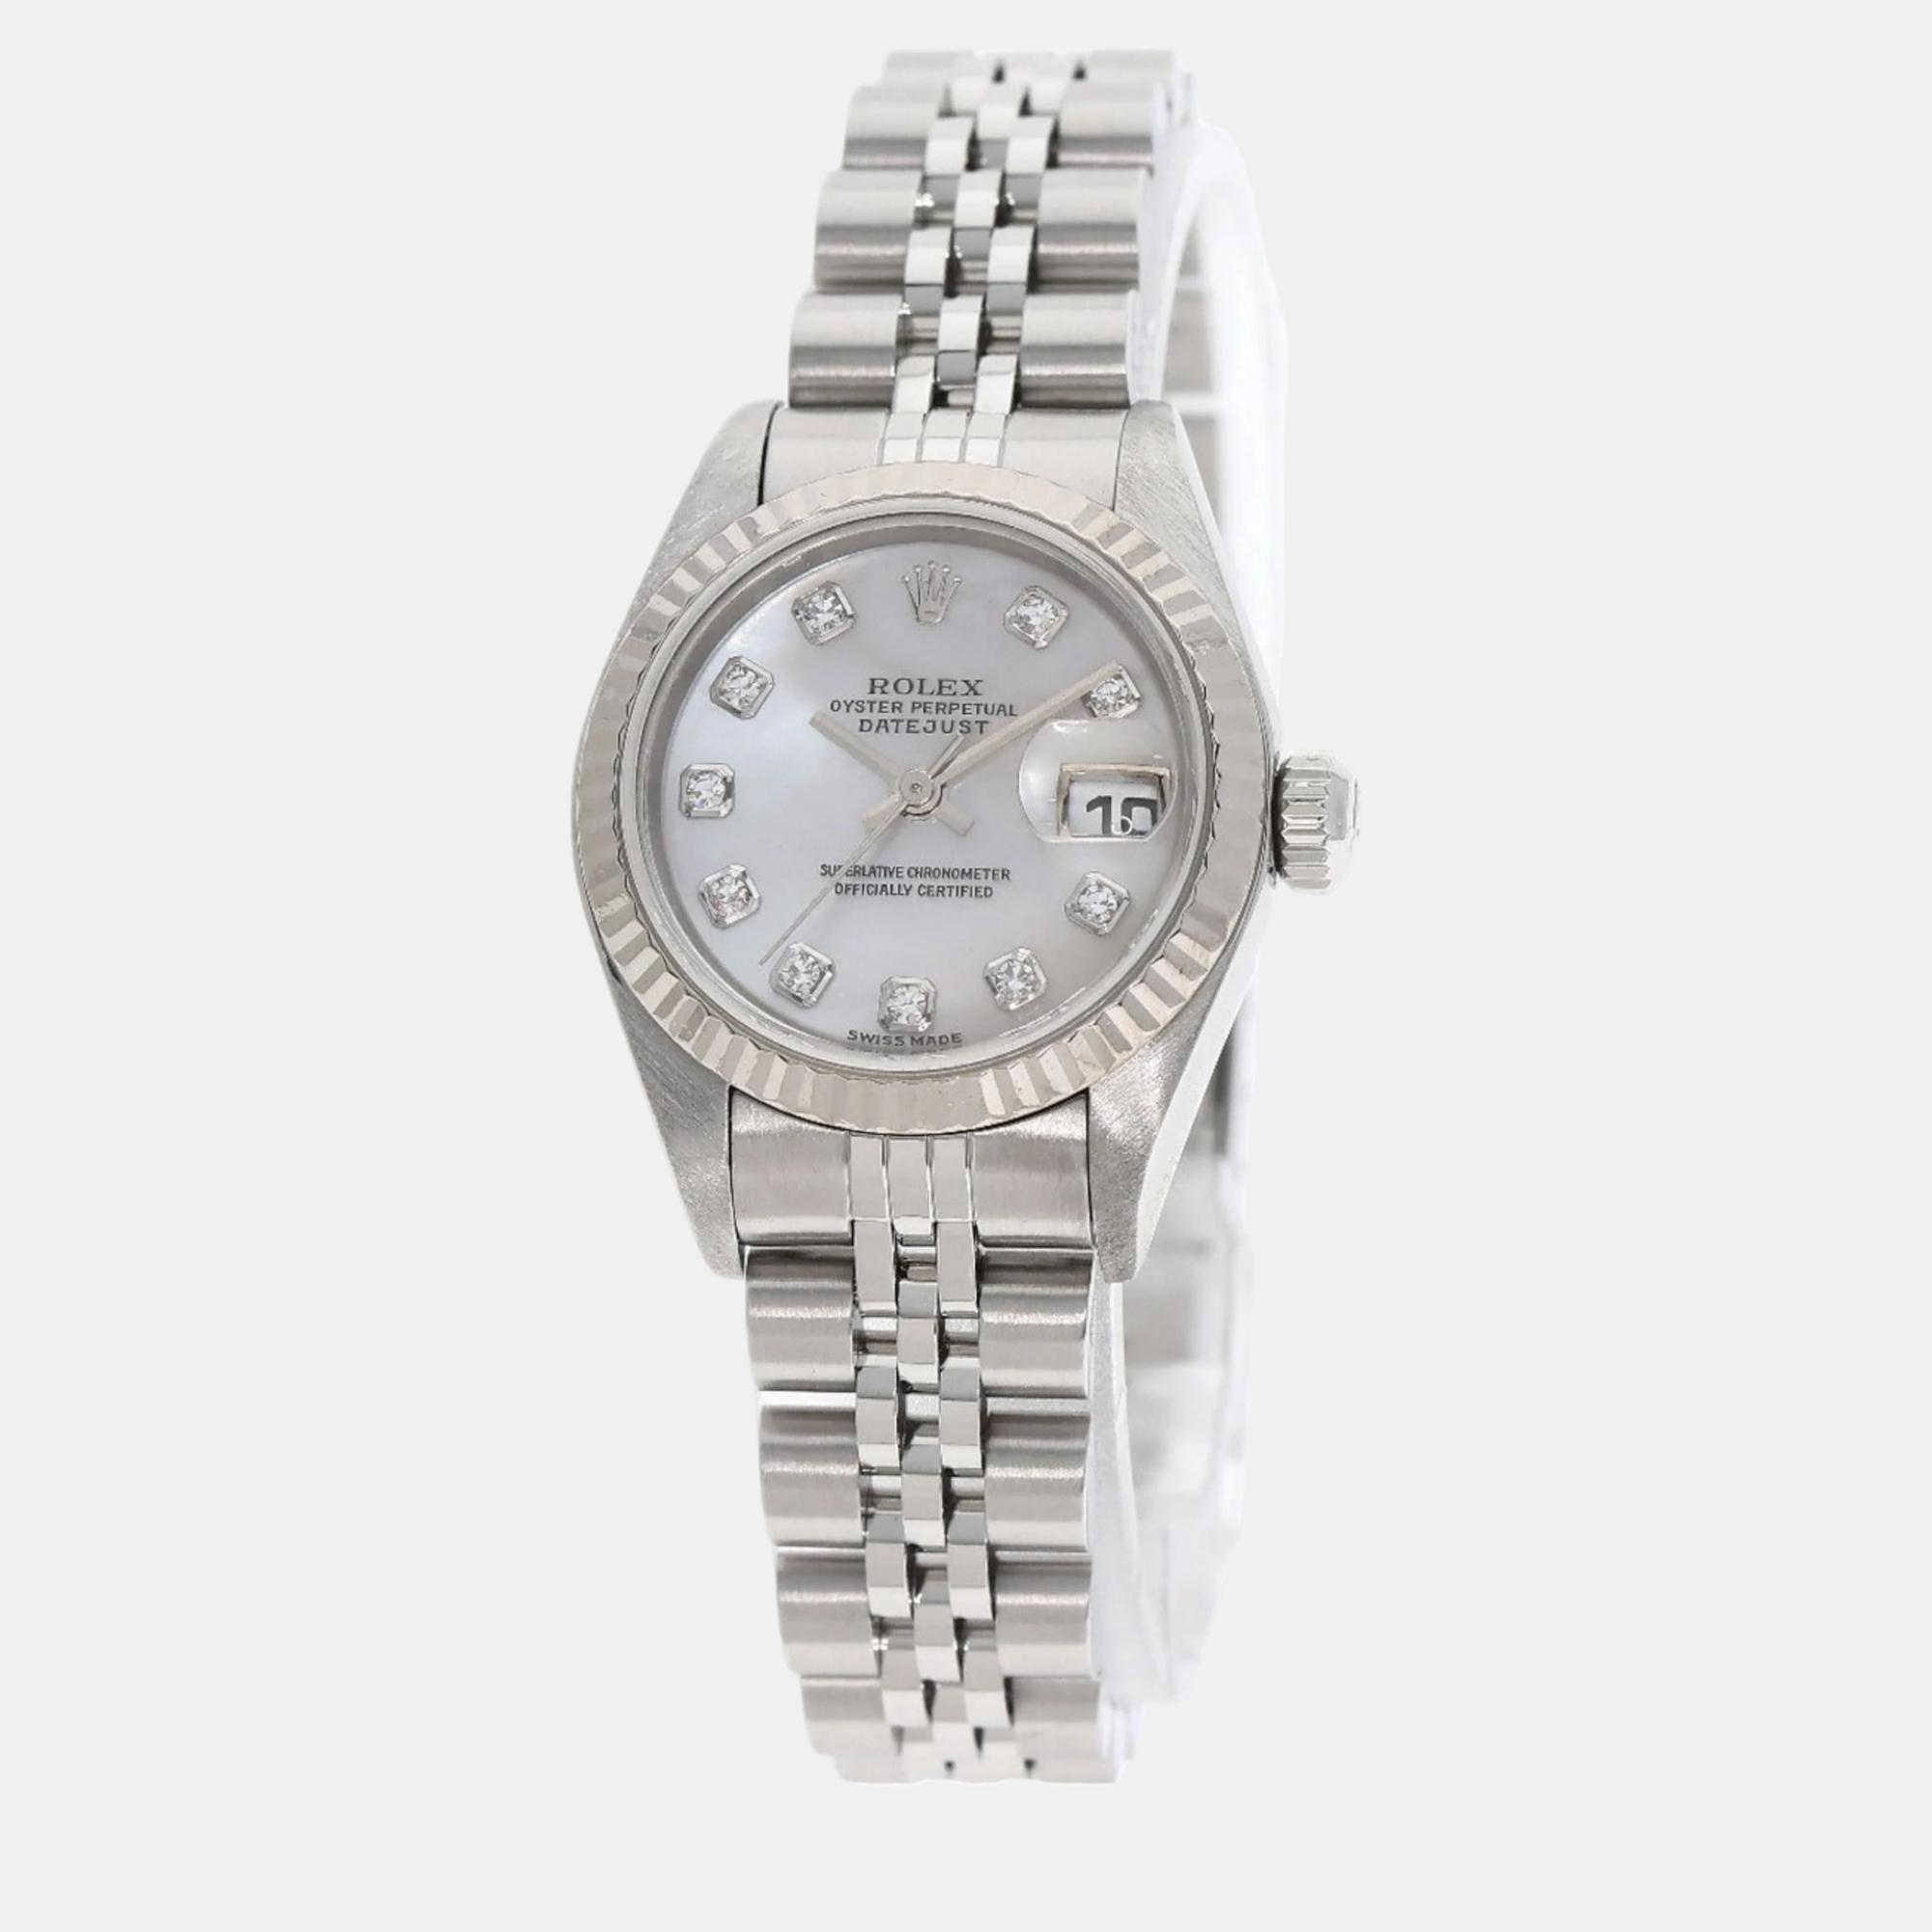 Rolex white shell stainless steel diamond datejust 79174 automatic women's wristwatch 26 mm